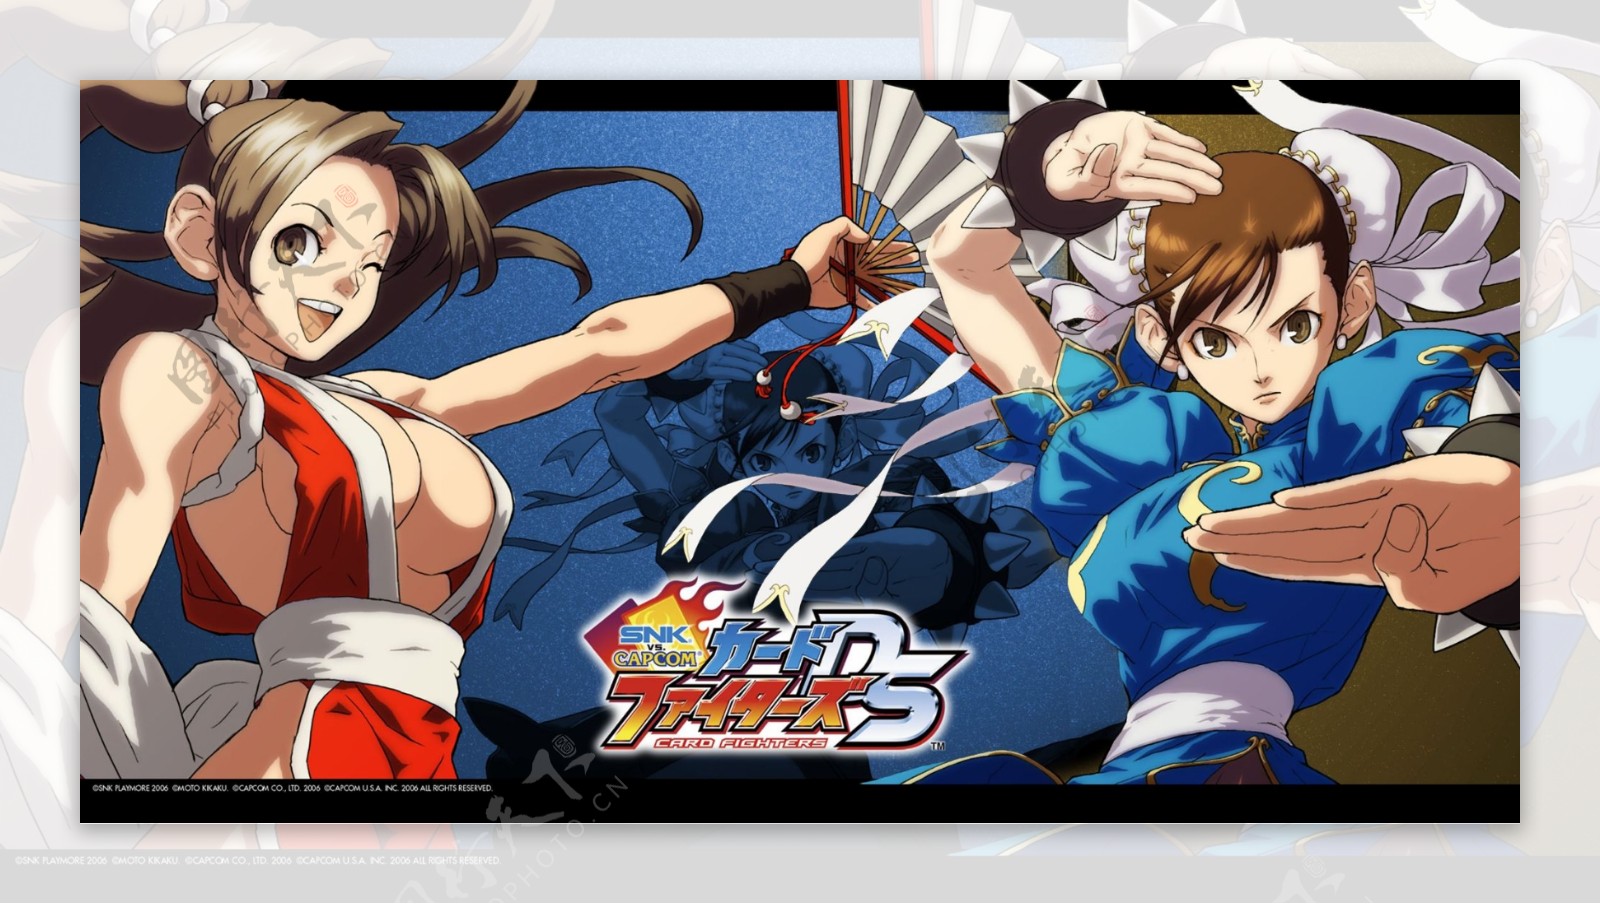 Sakazaki Yuri - King of Fighters - Image #830215 - Zerochan Anime Image ...